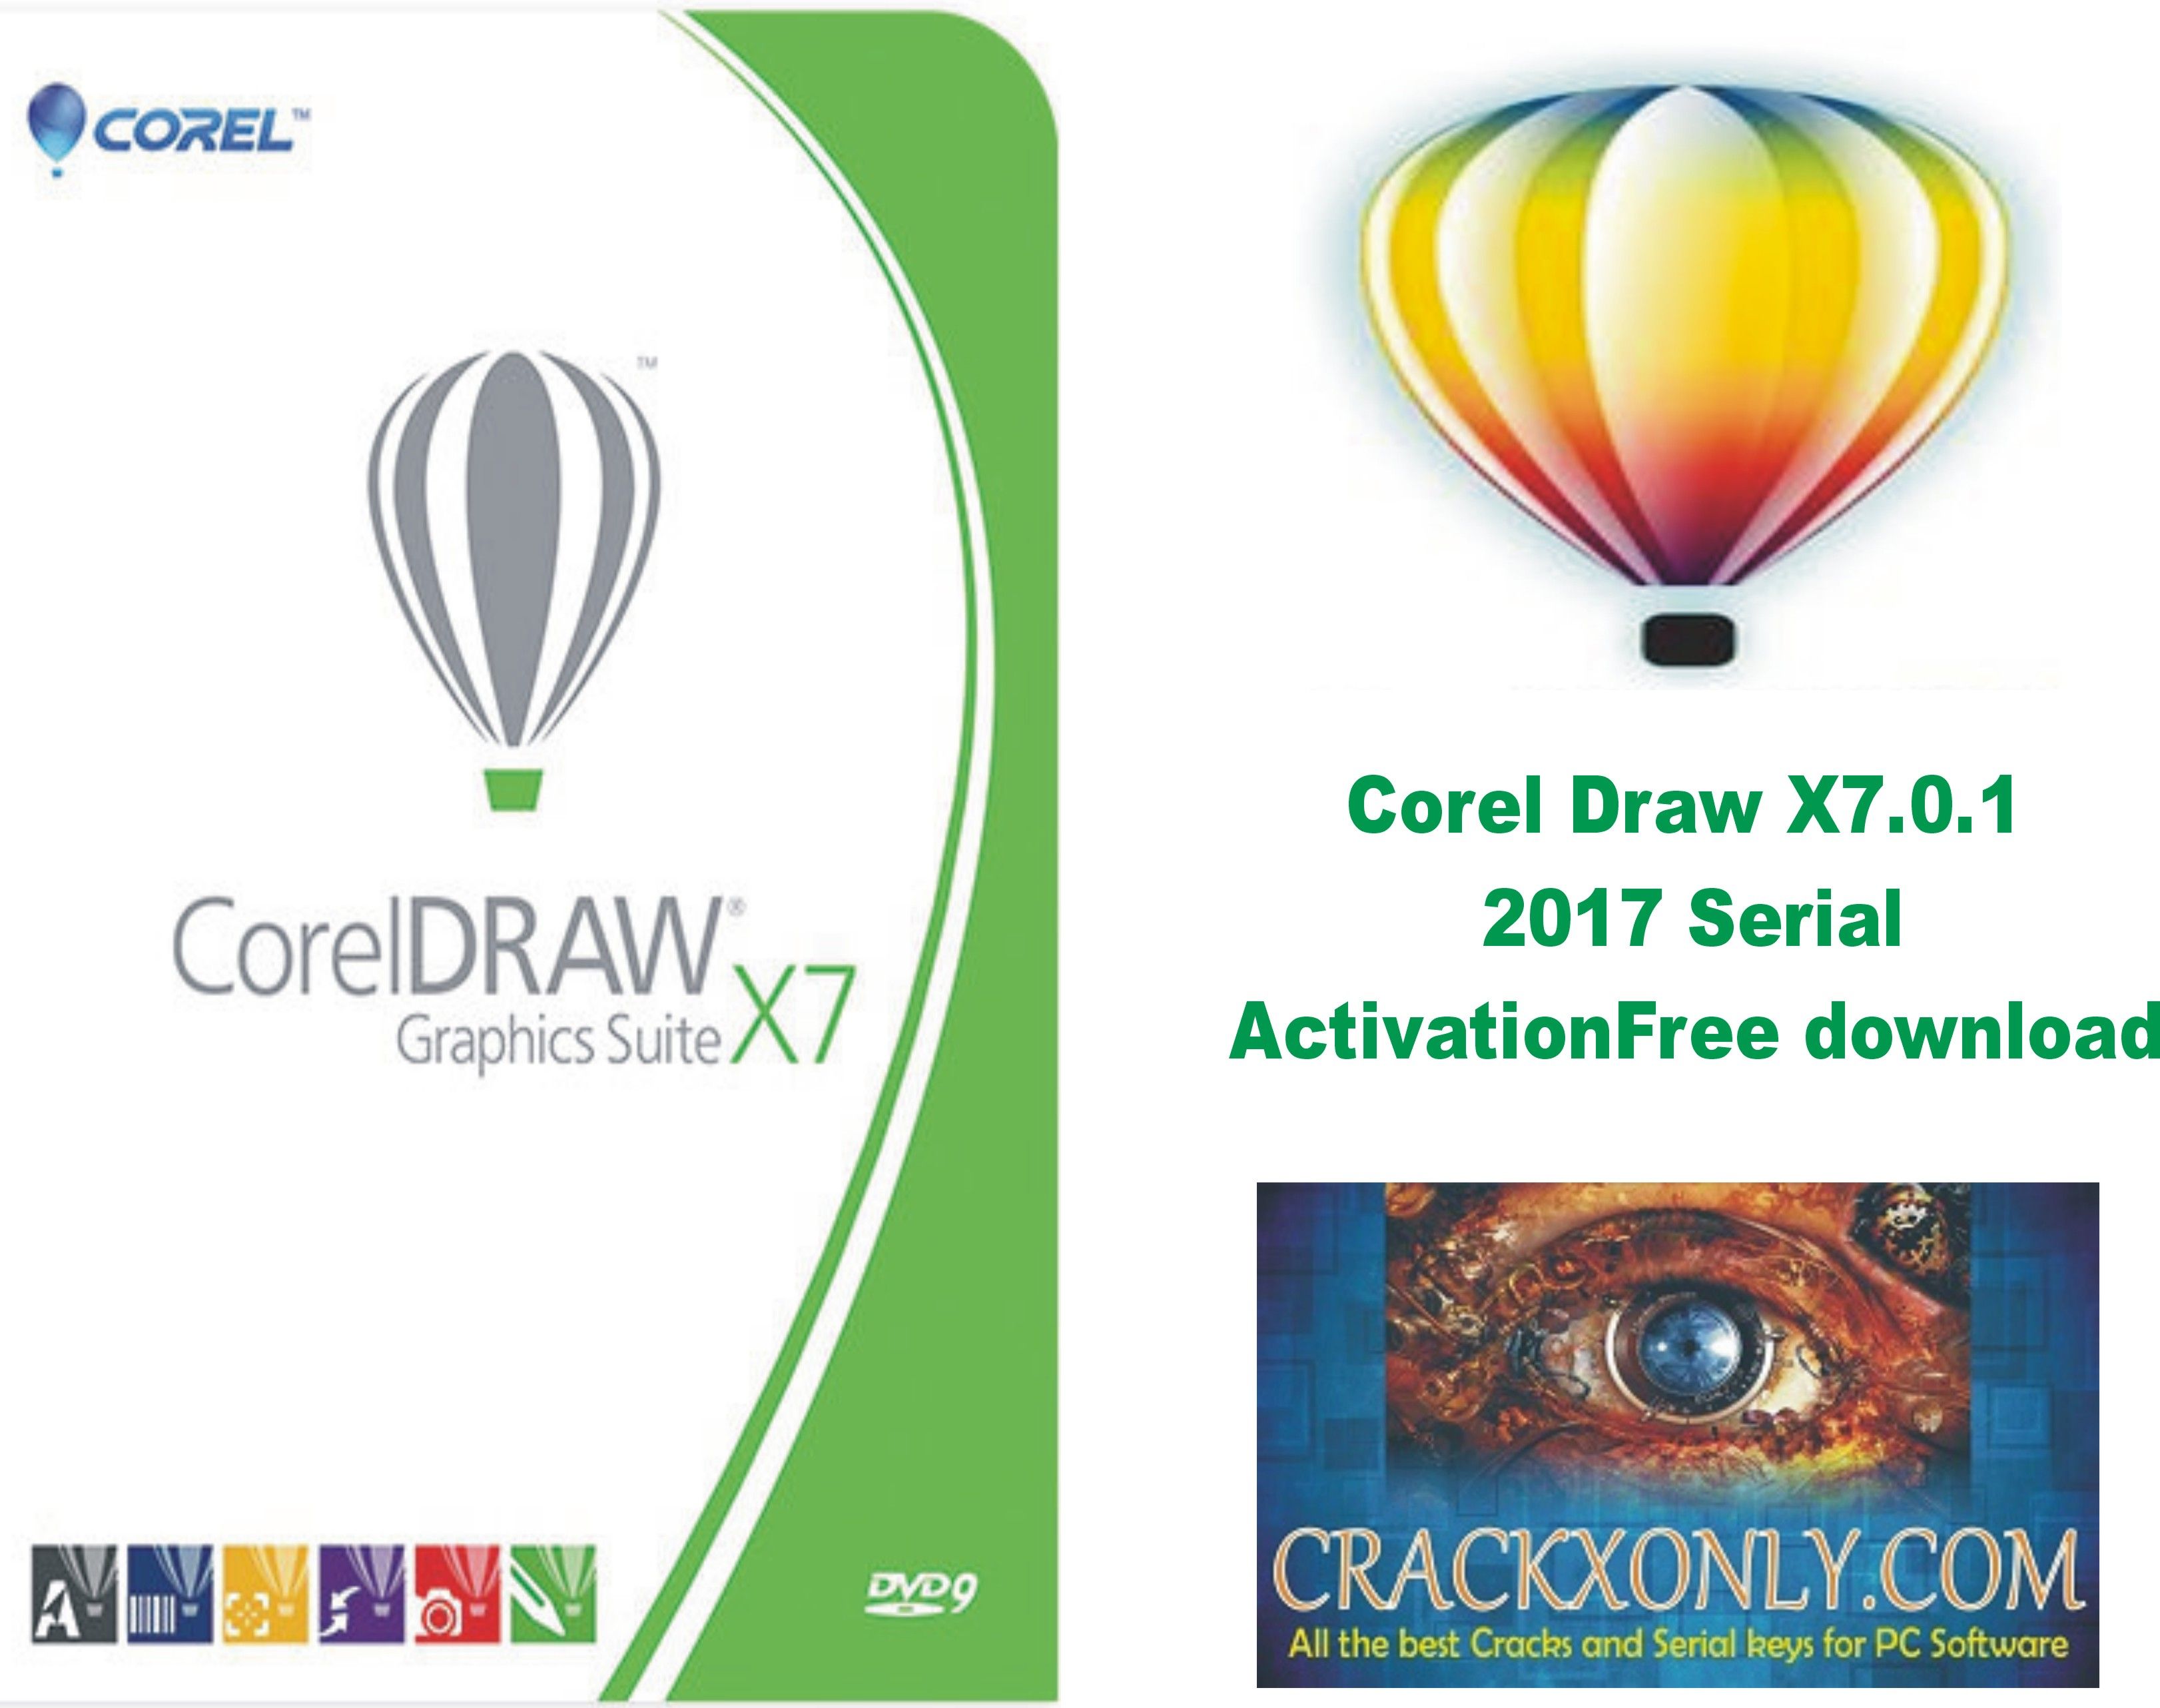 activate corel draw x7